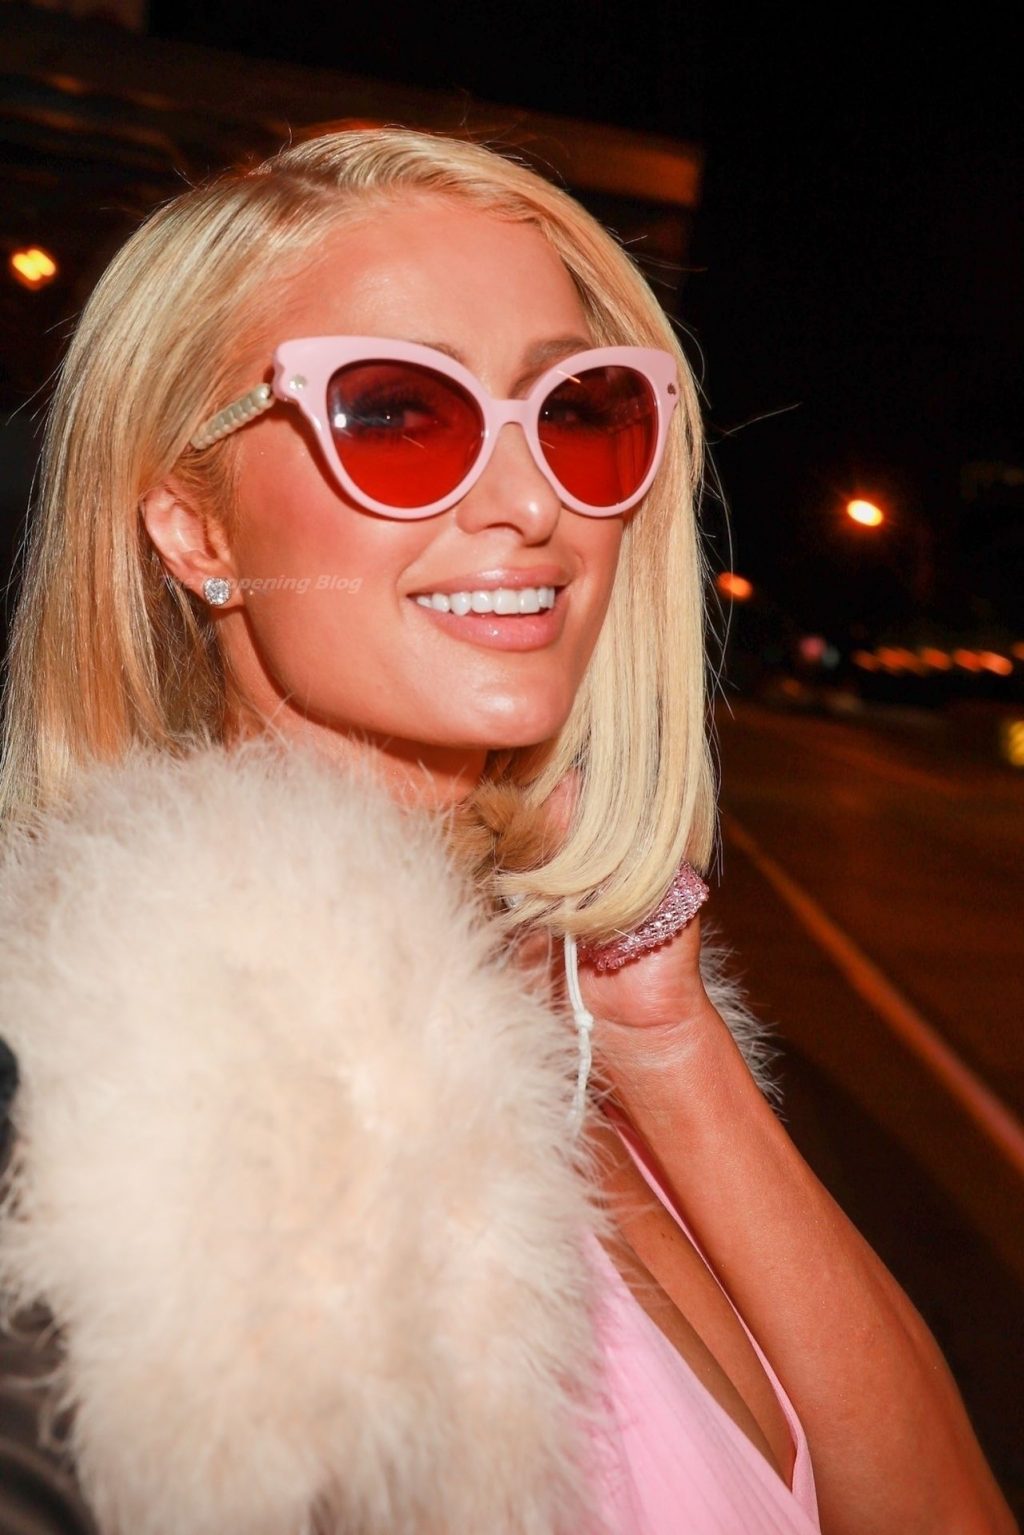 Paris Hilton Attends an Oscars Pre-Party with Her Fiancé (100 New Photos)